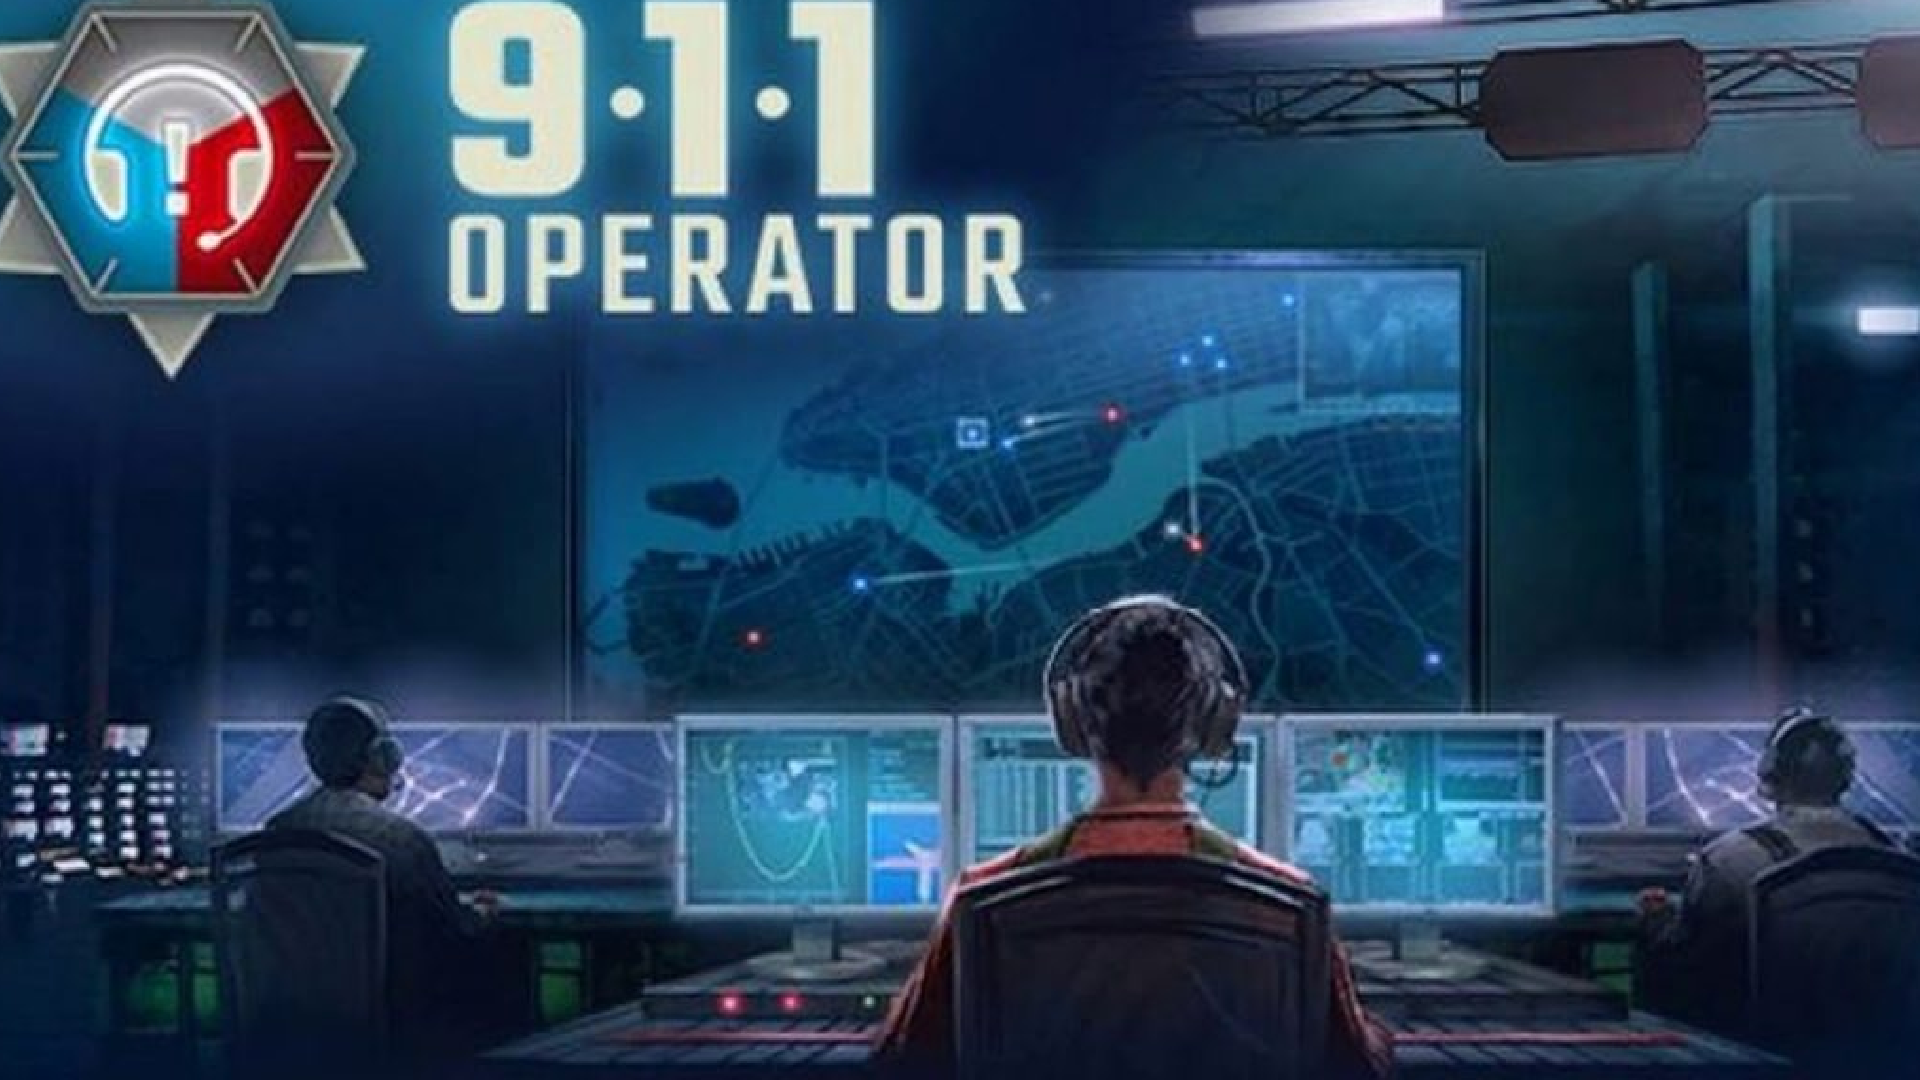 Banner of Operator 911 